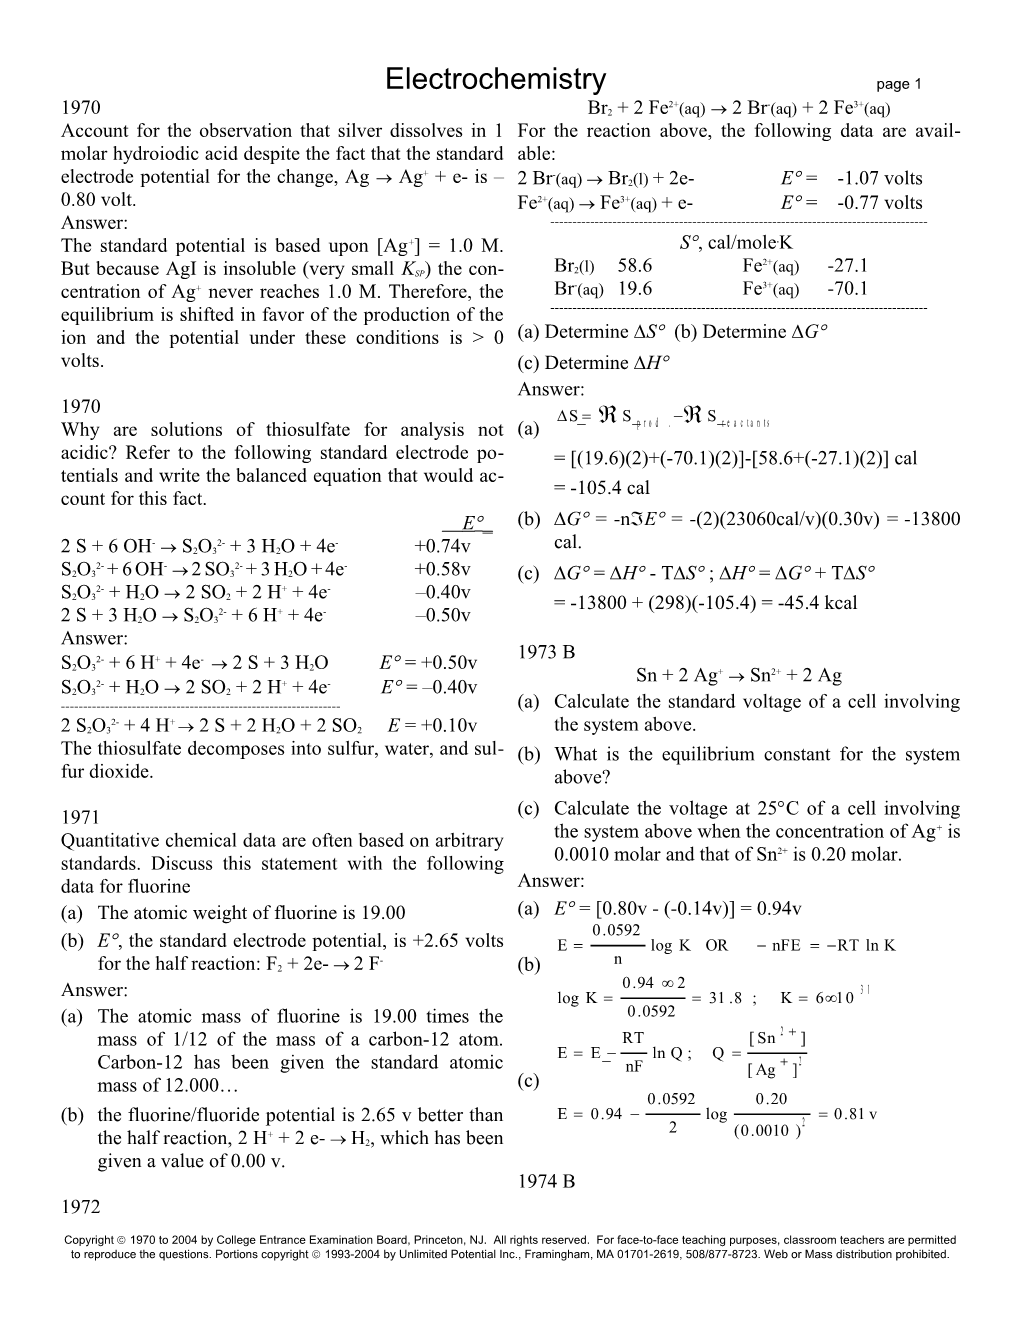 Electrochemistry Page 8